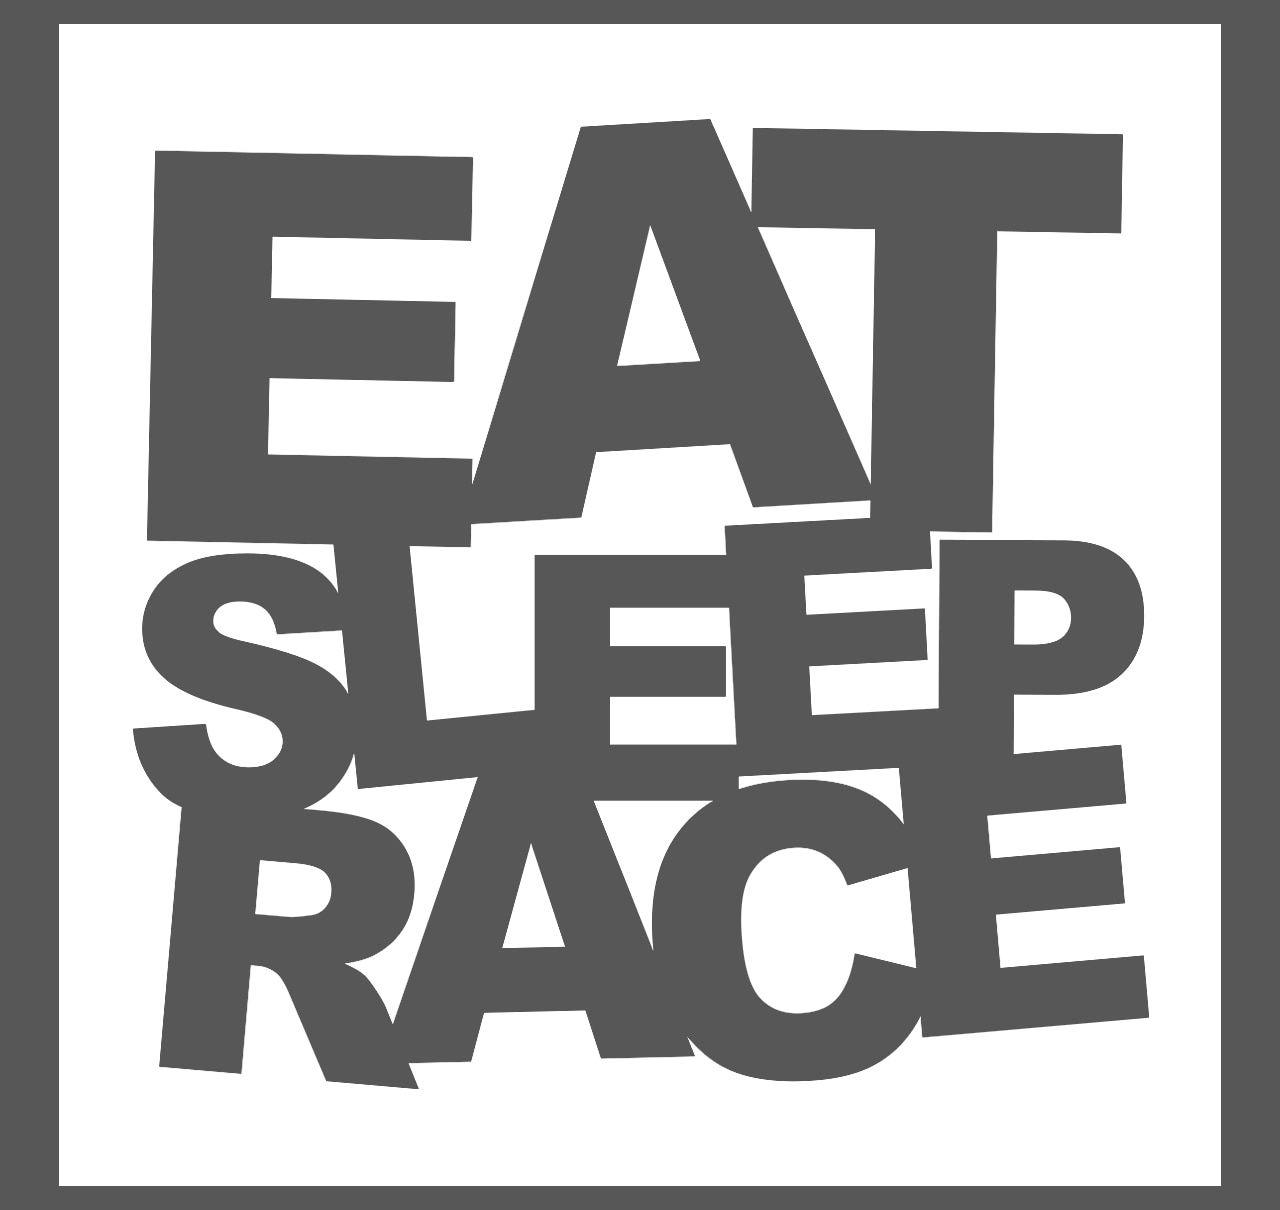 White Race Logo - Logo Square Vinyl Decal. White Sleep Race Lifestyle